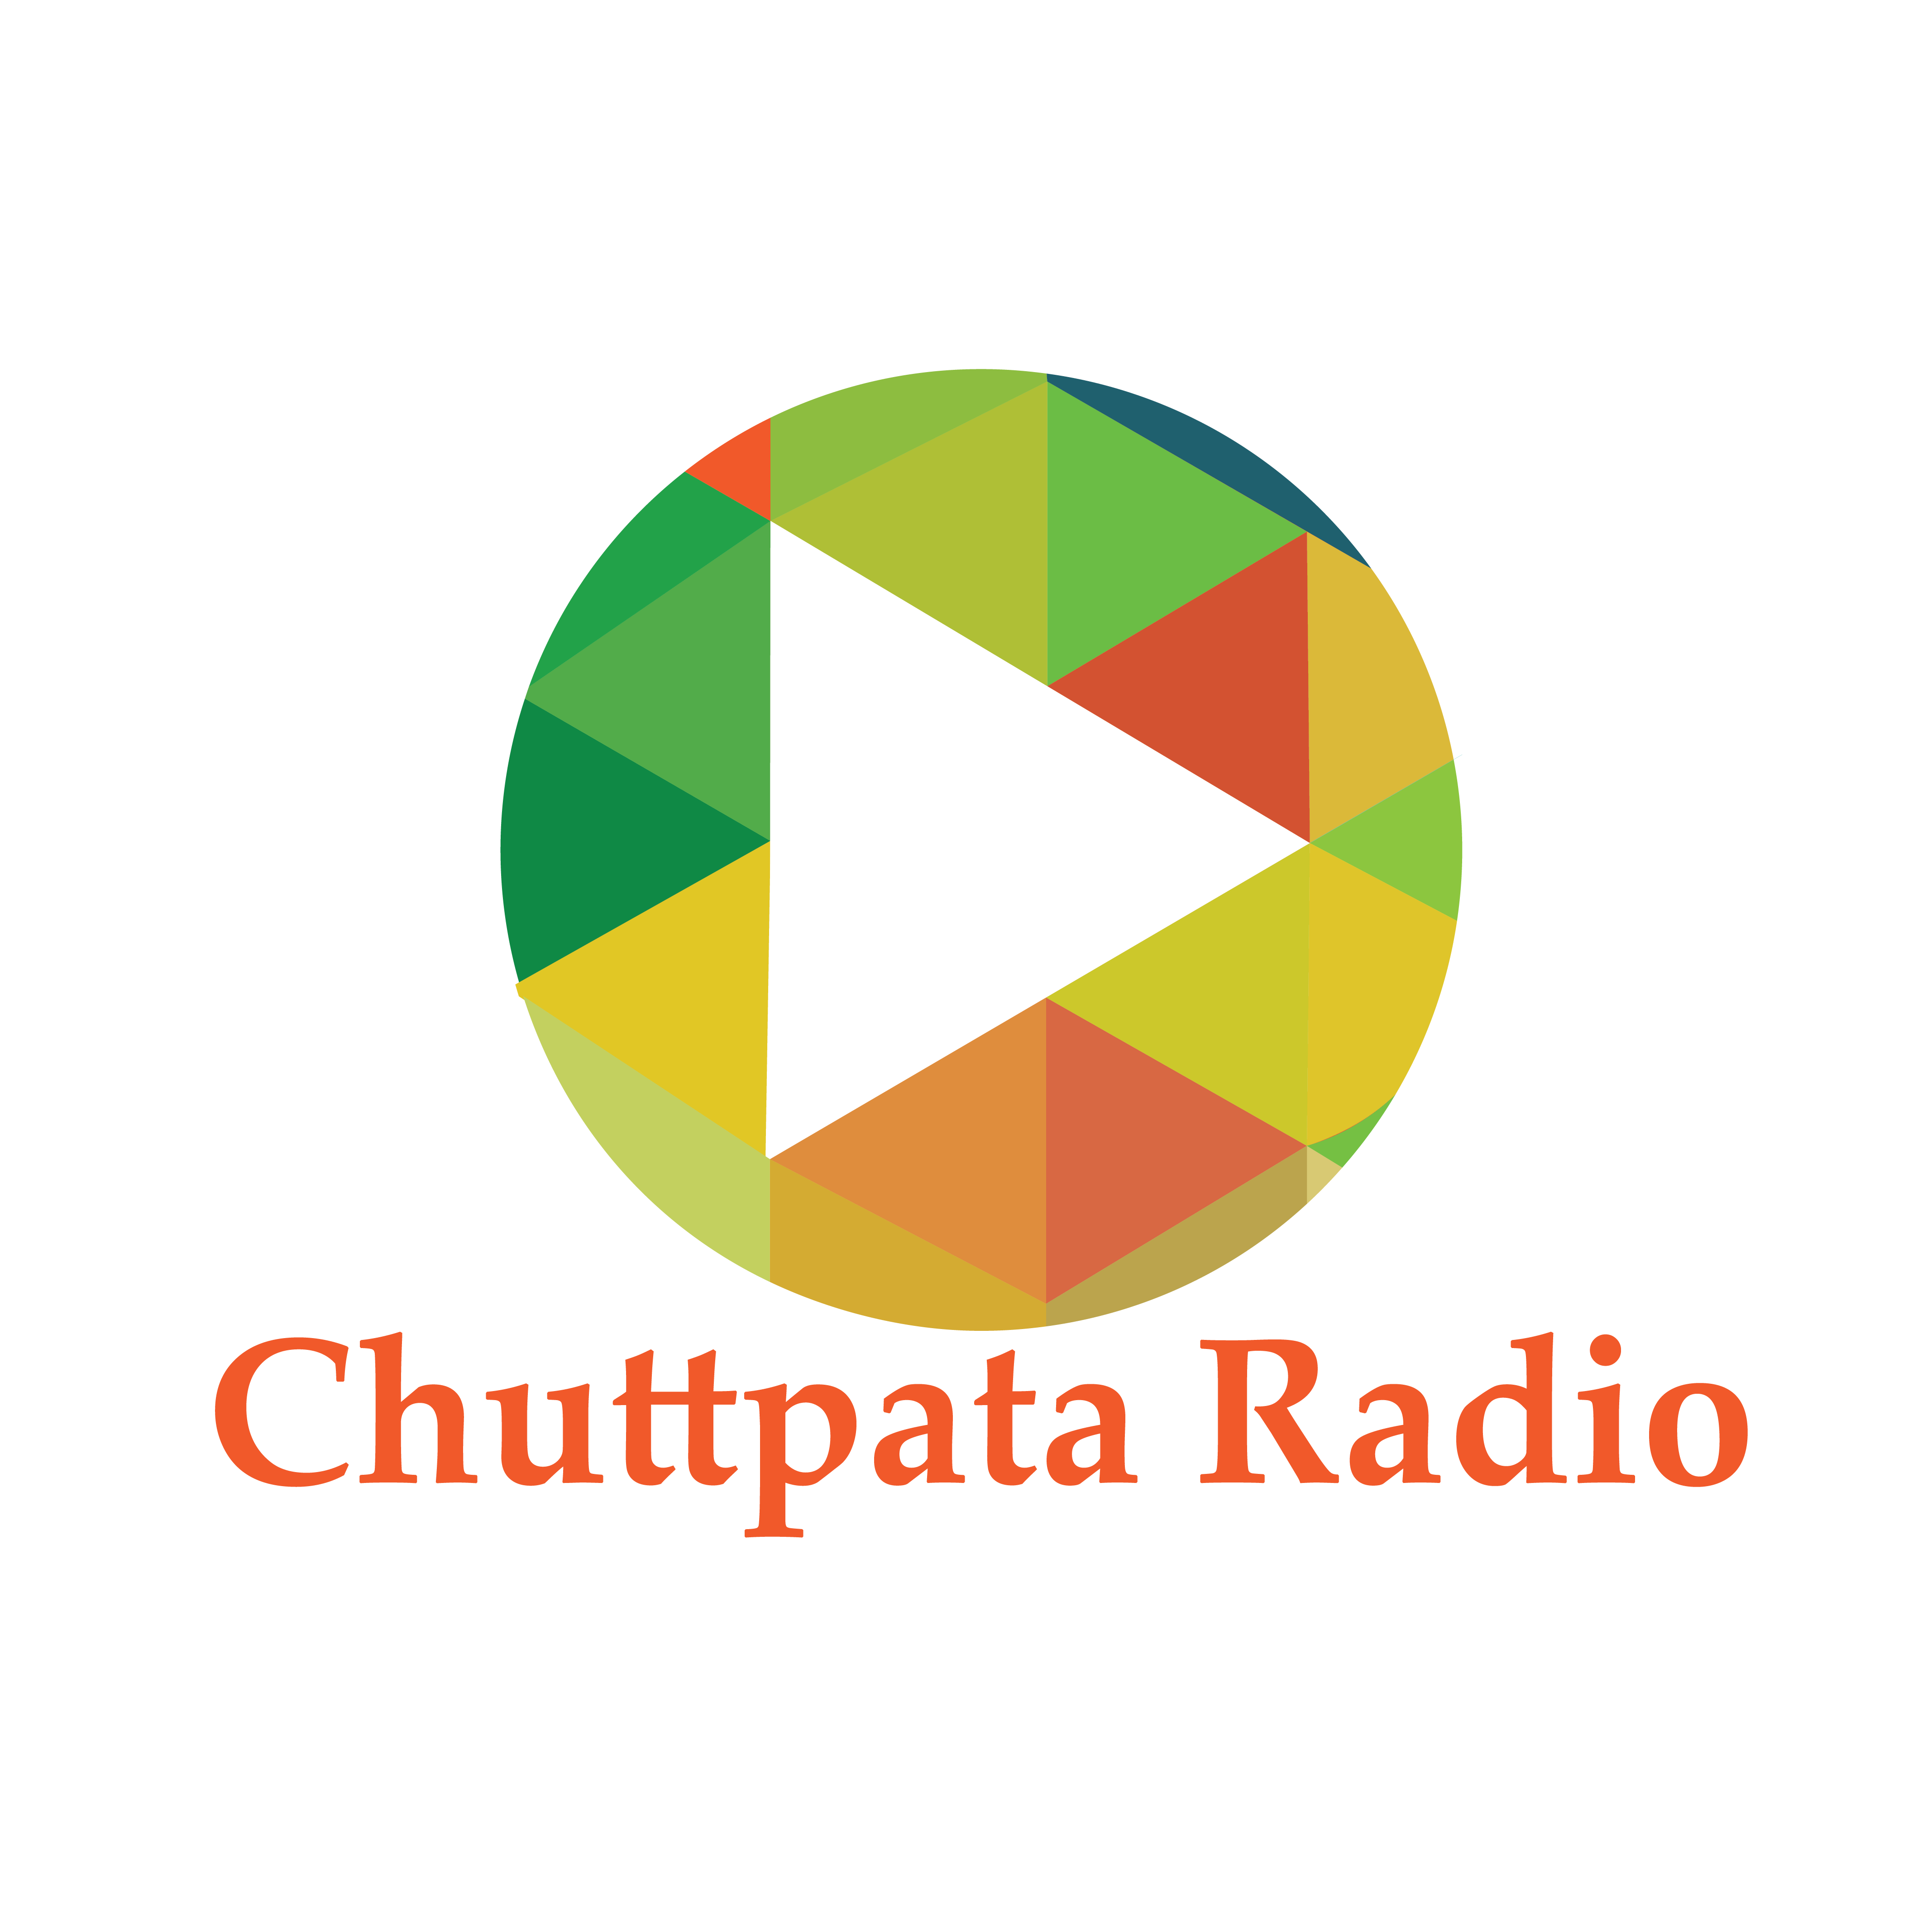 Chuttpata Radio